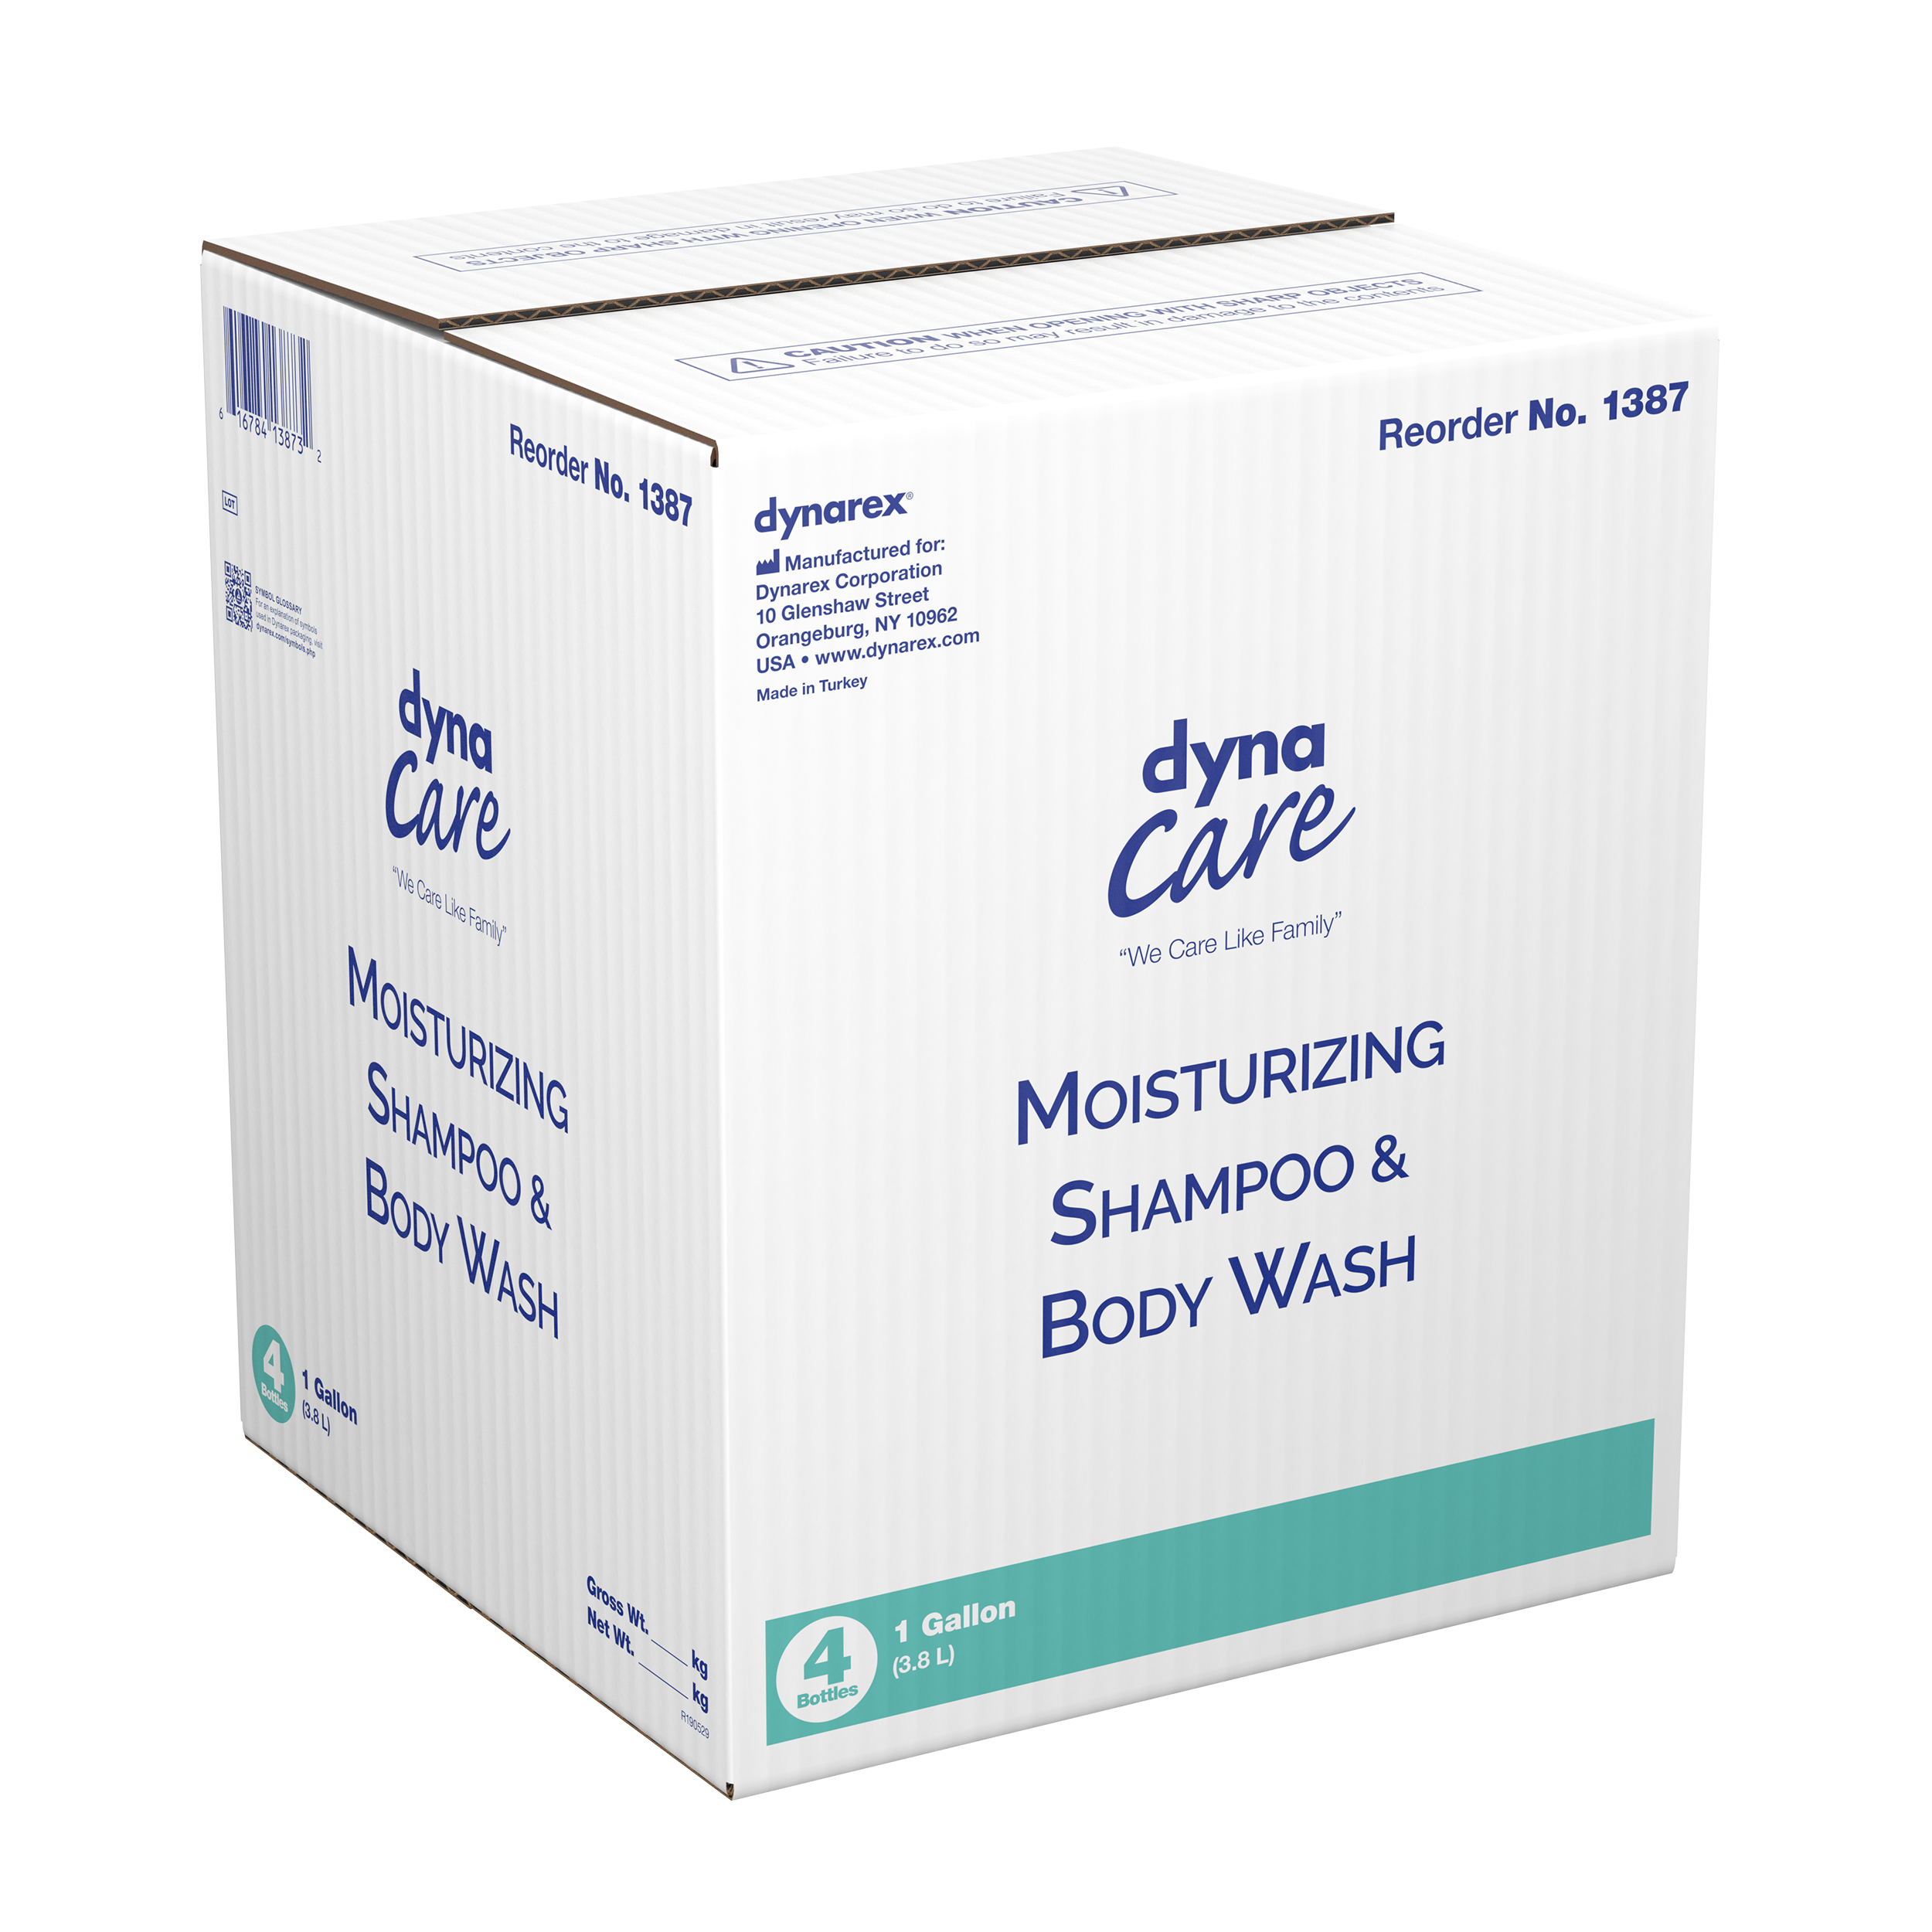 Dynarex - Moisturizing Shampoo and Body Wash - 1 Gallon